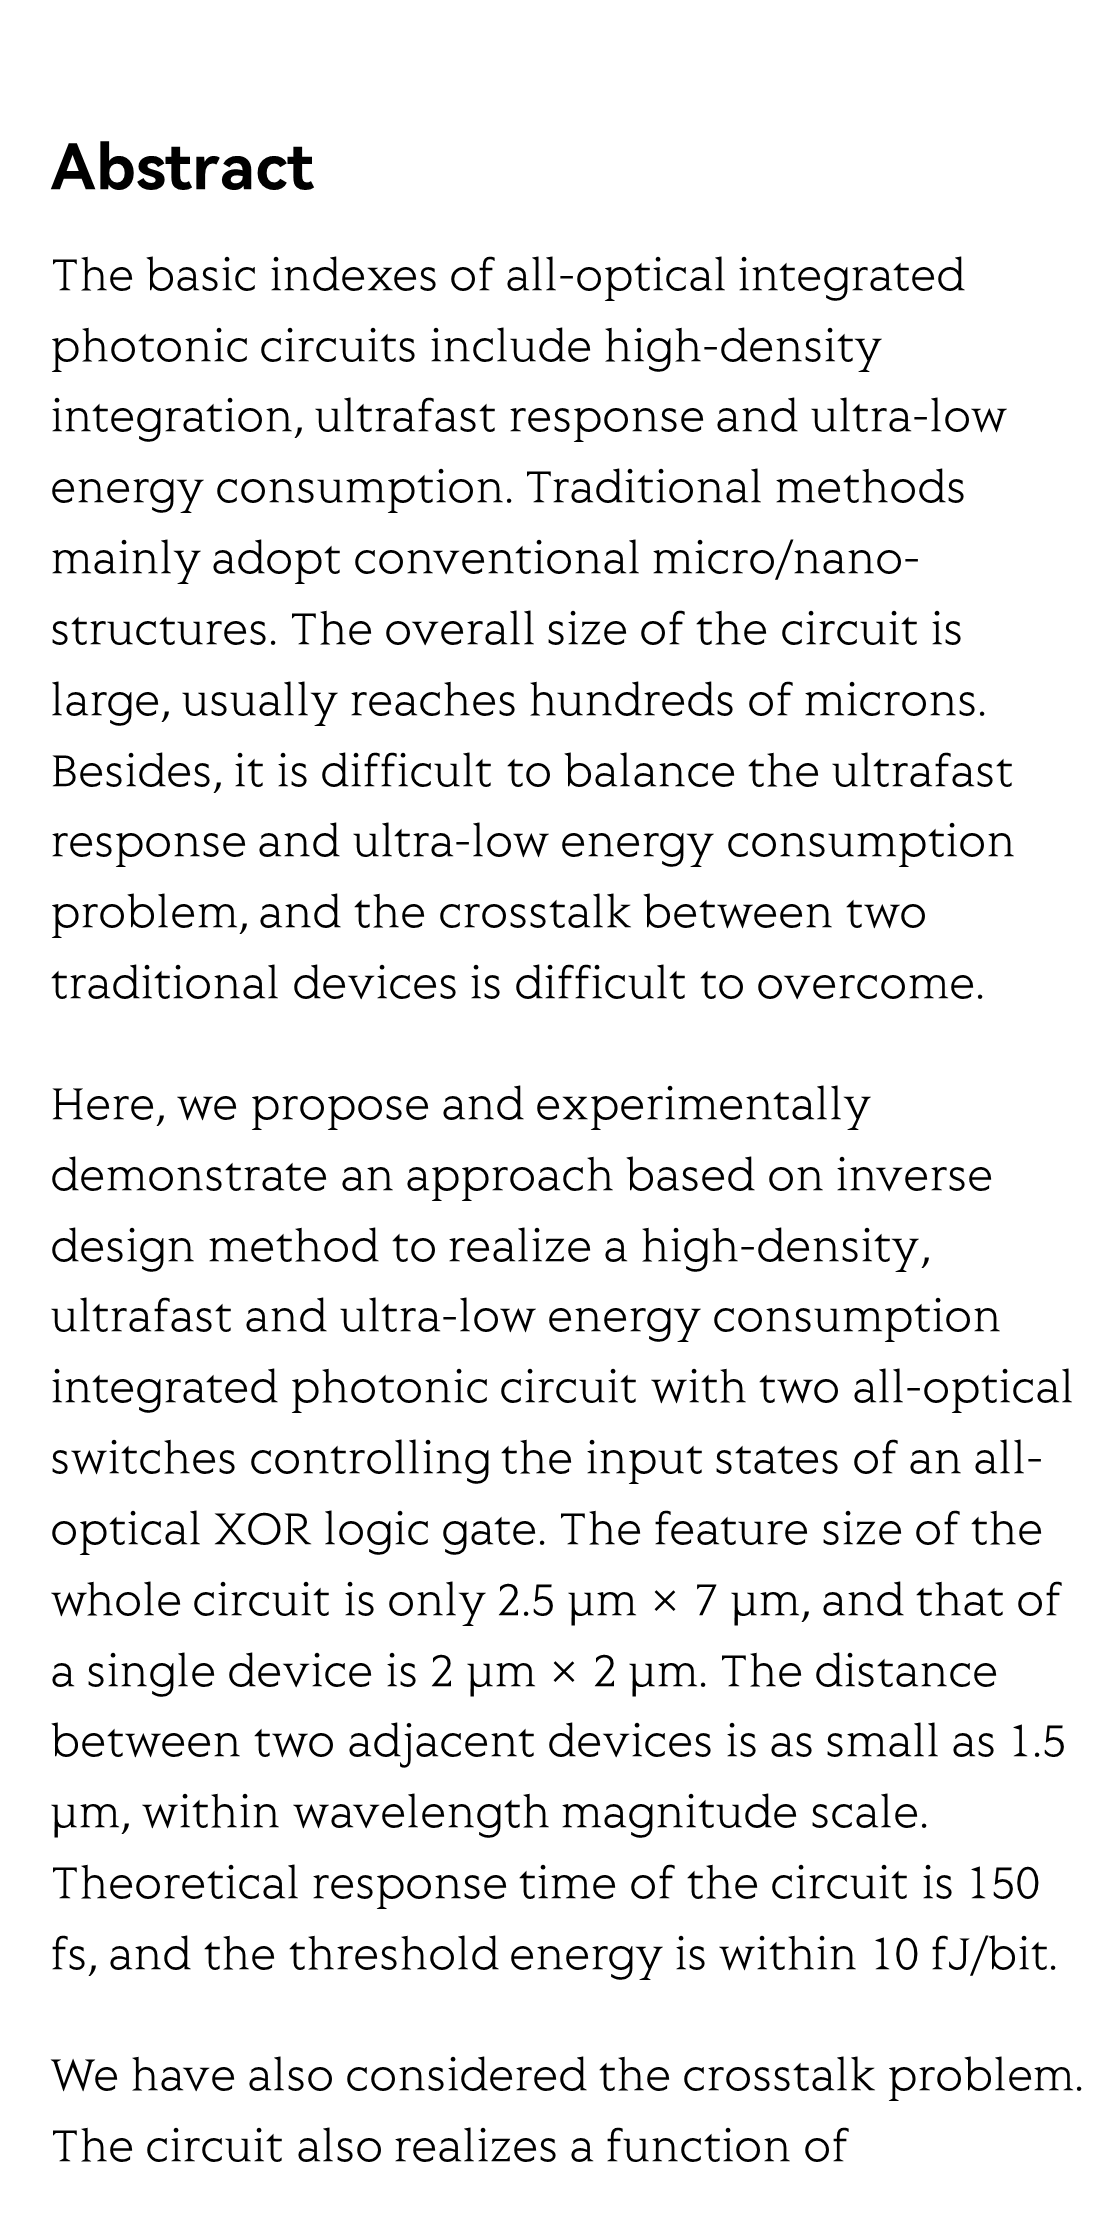 High performance integrated photonic circuit based on inverse design method_2